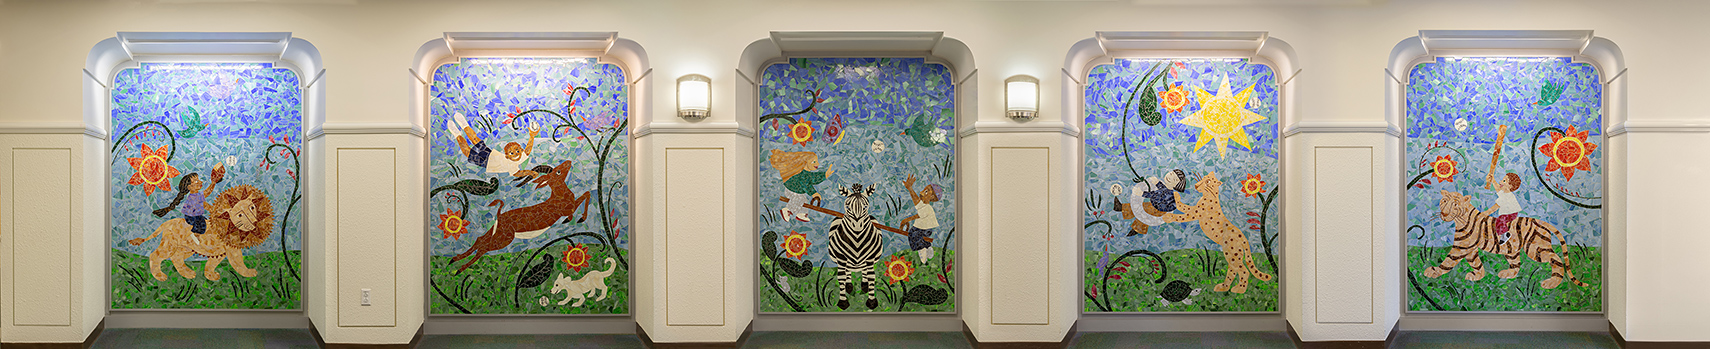 Mosaic-artwork-design-by-jonathan-brown-at-Children